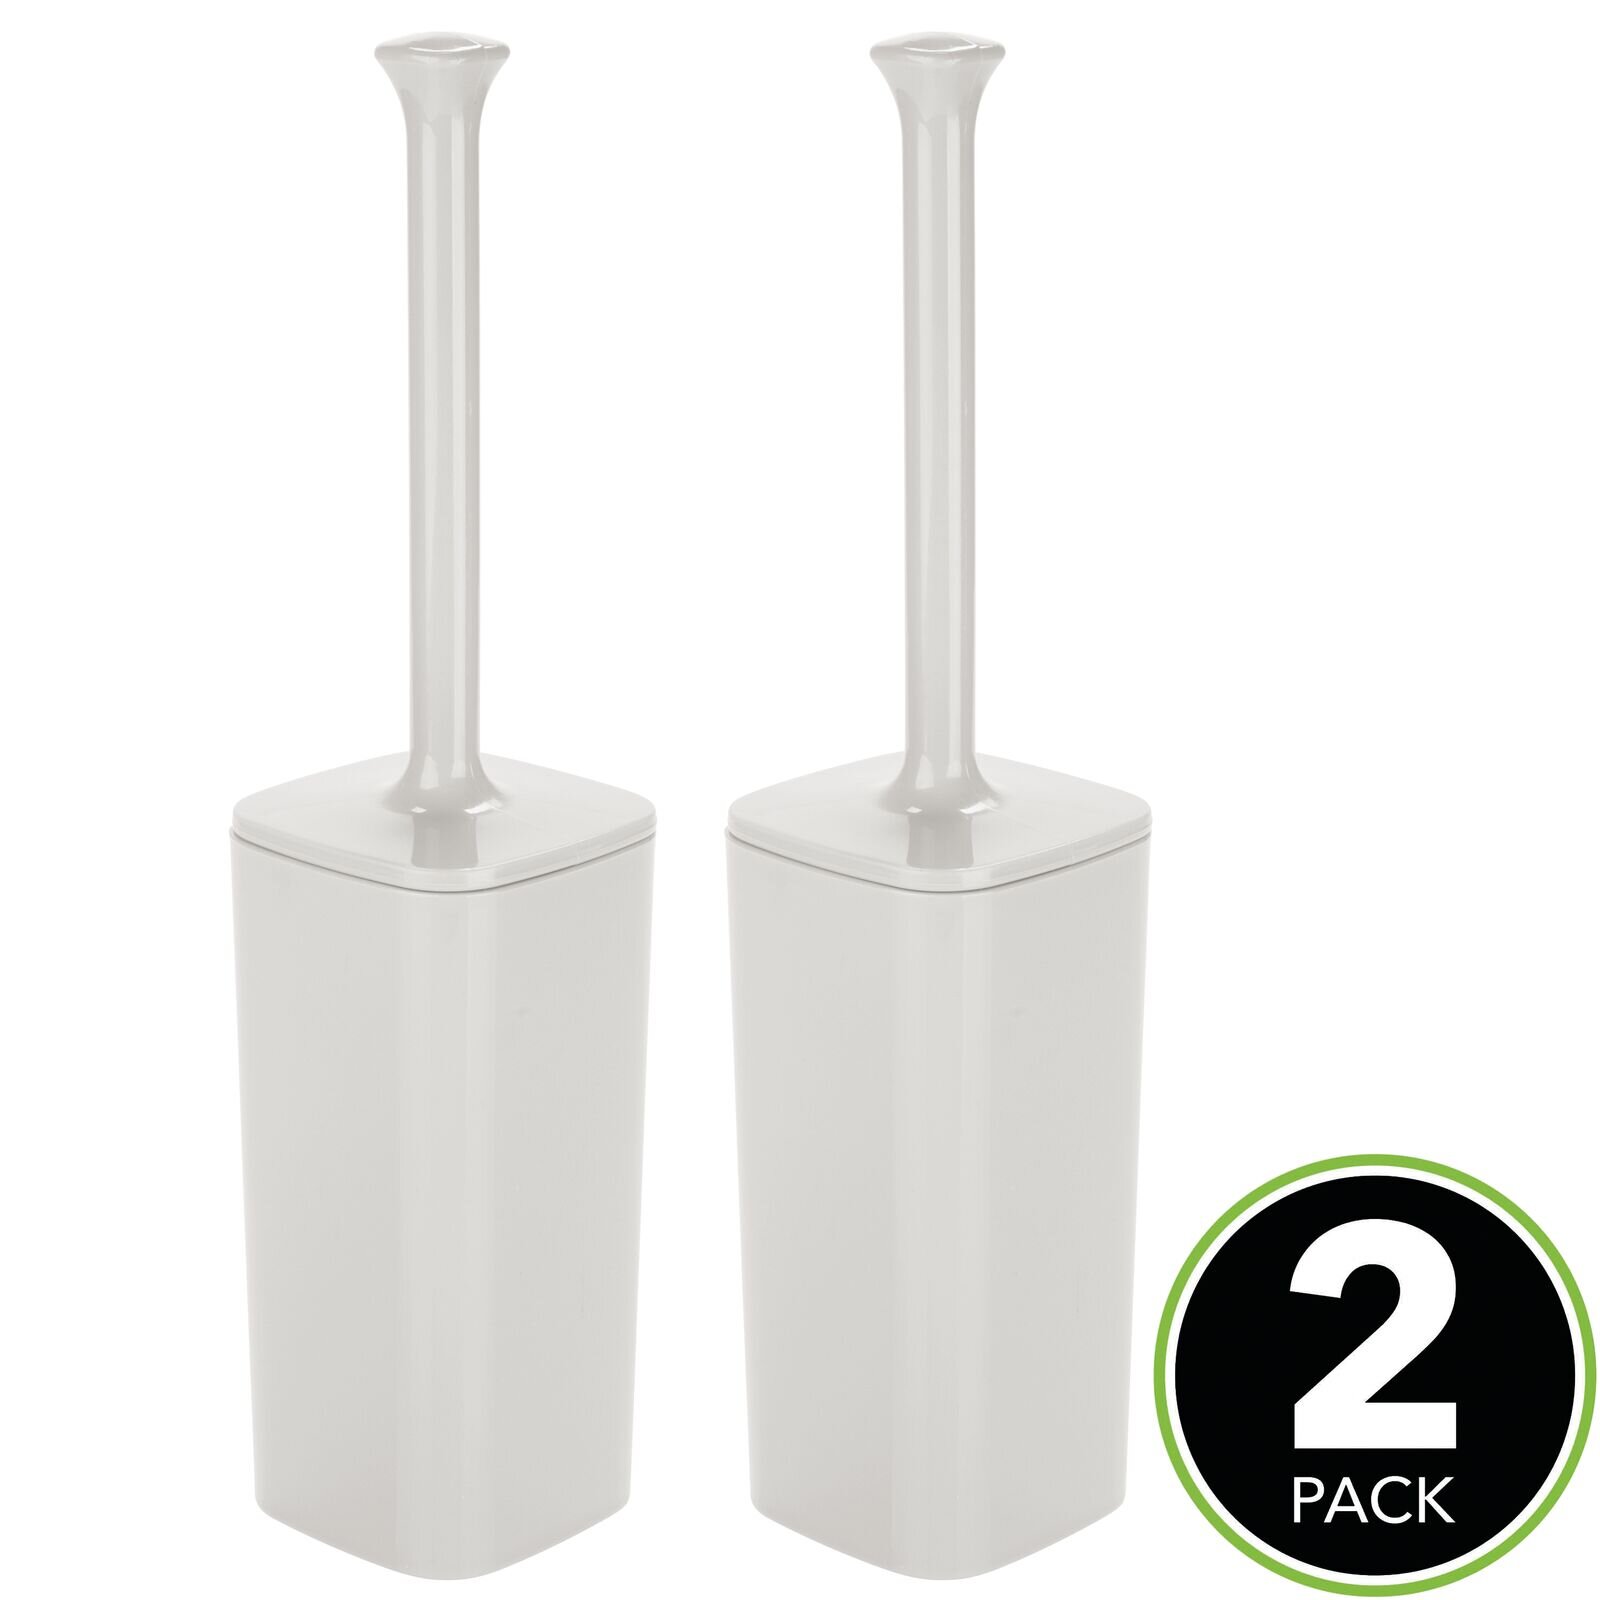 2 Pack mDesign Compact Plastic Bathroom Toilet Bowl Brush and Holder White